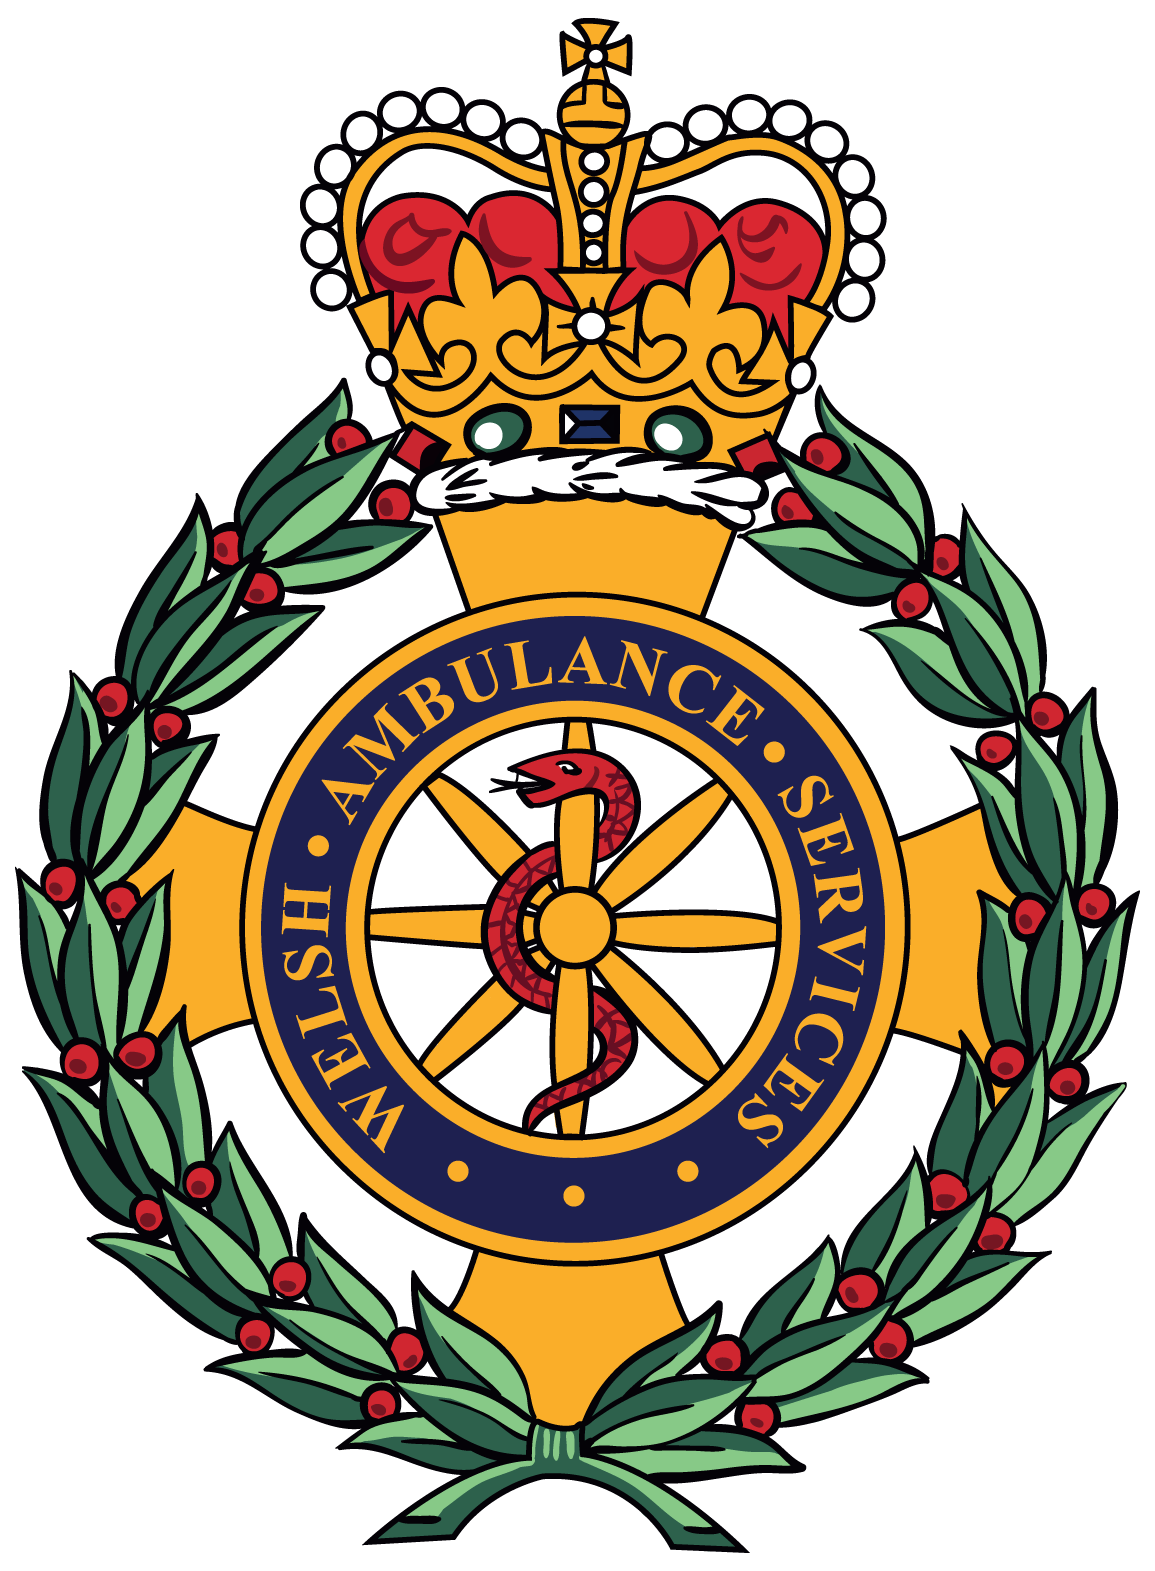 Welsh ambulance service logo